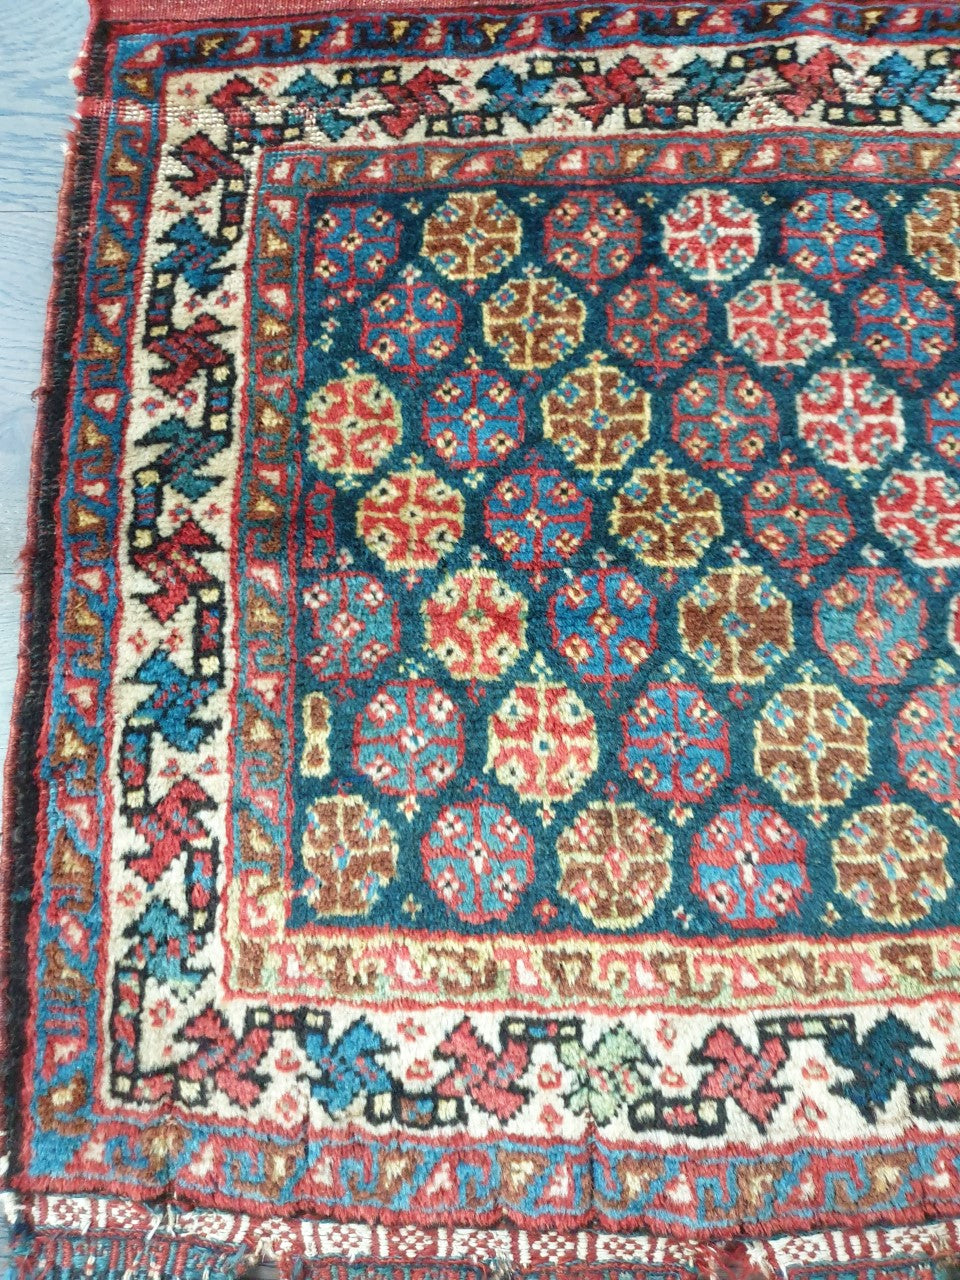 Beautiful old antique decorative Qashqai bag